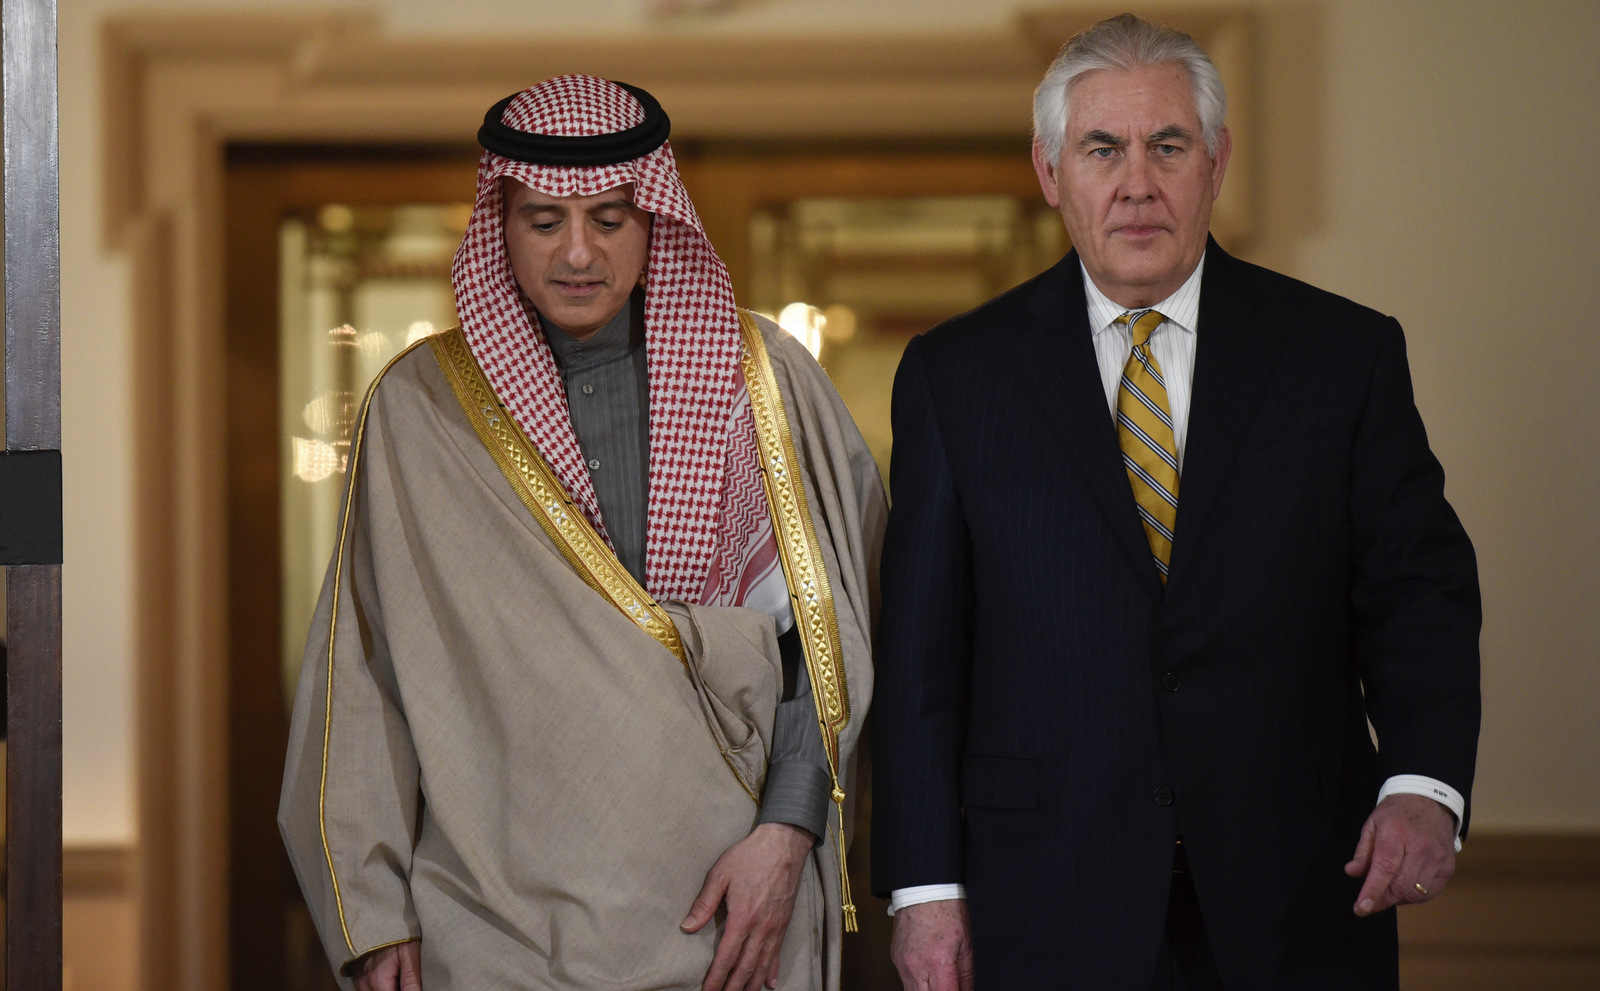 Secretary of State Rex Tillerson and Saudi Foreign Minister Adel Al-Jubeir meet at the State Department in Washington, Thursday, March 23, 2017. (AP/Sait Serkan Gurbuz)